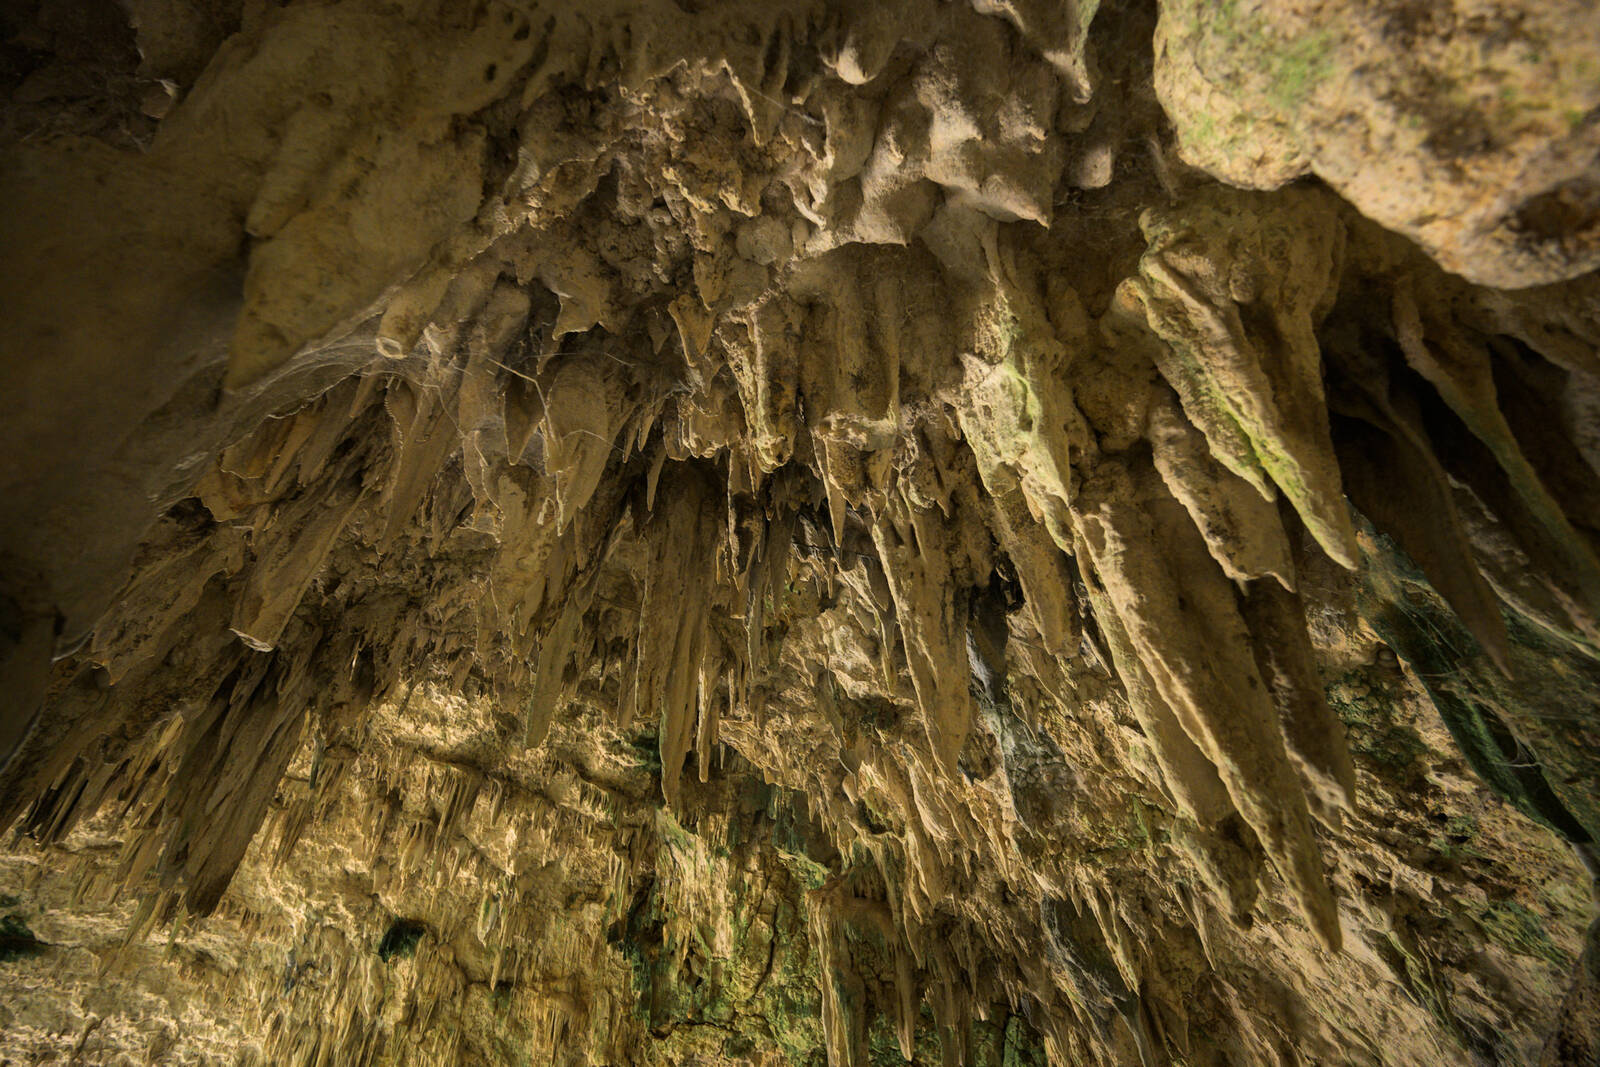 Image of Liang Bua Cave (Hobbit Cave) by Luka Esenko